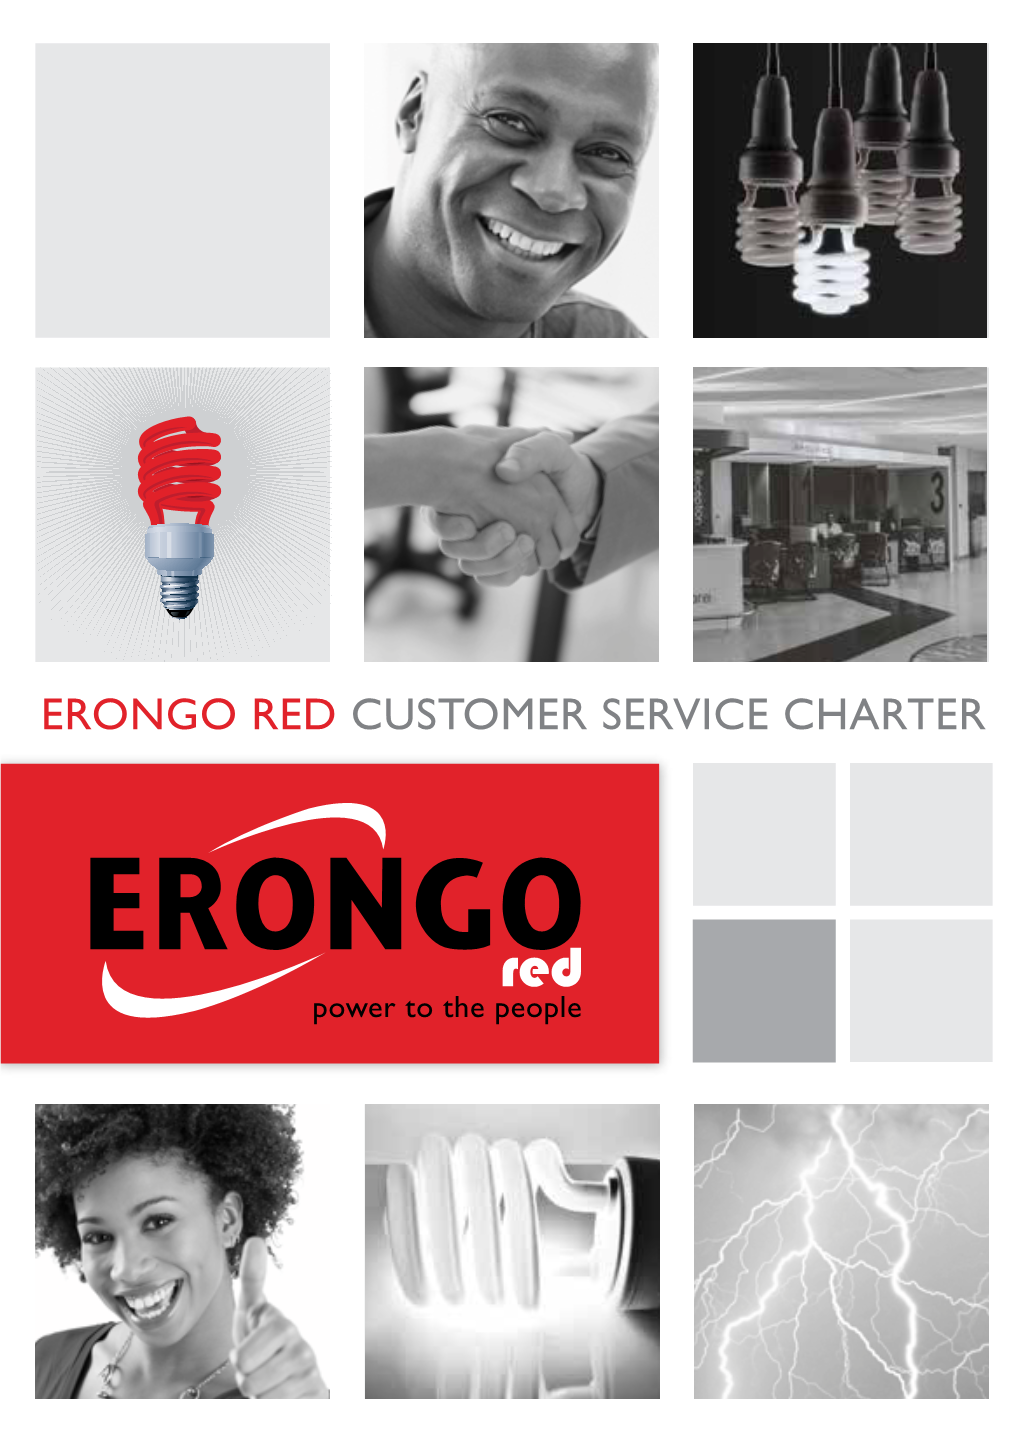 Erongo Red Customer Service Charter Vision